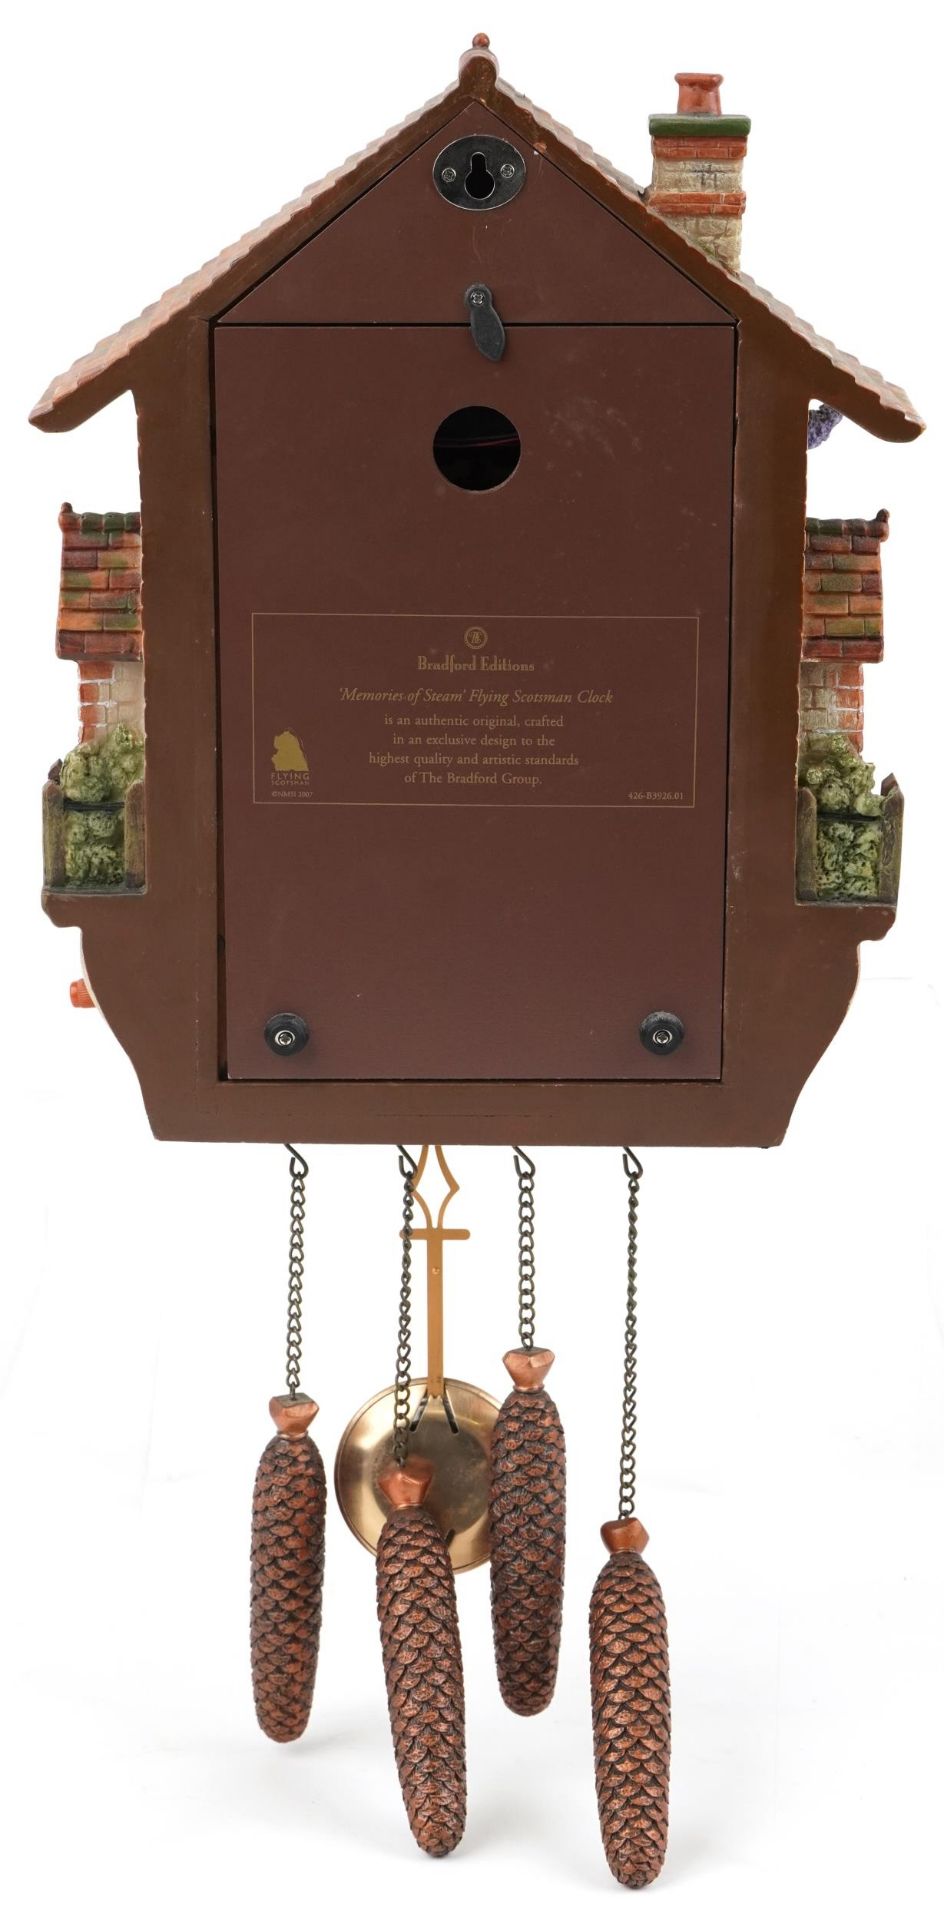 Bradford Edition Memories of Steam Flying Scotsman cuckoo clock, 31.5cm high - Image 2 of 4